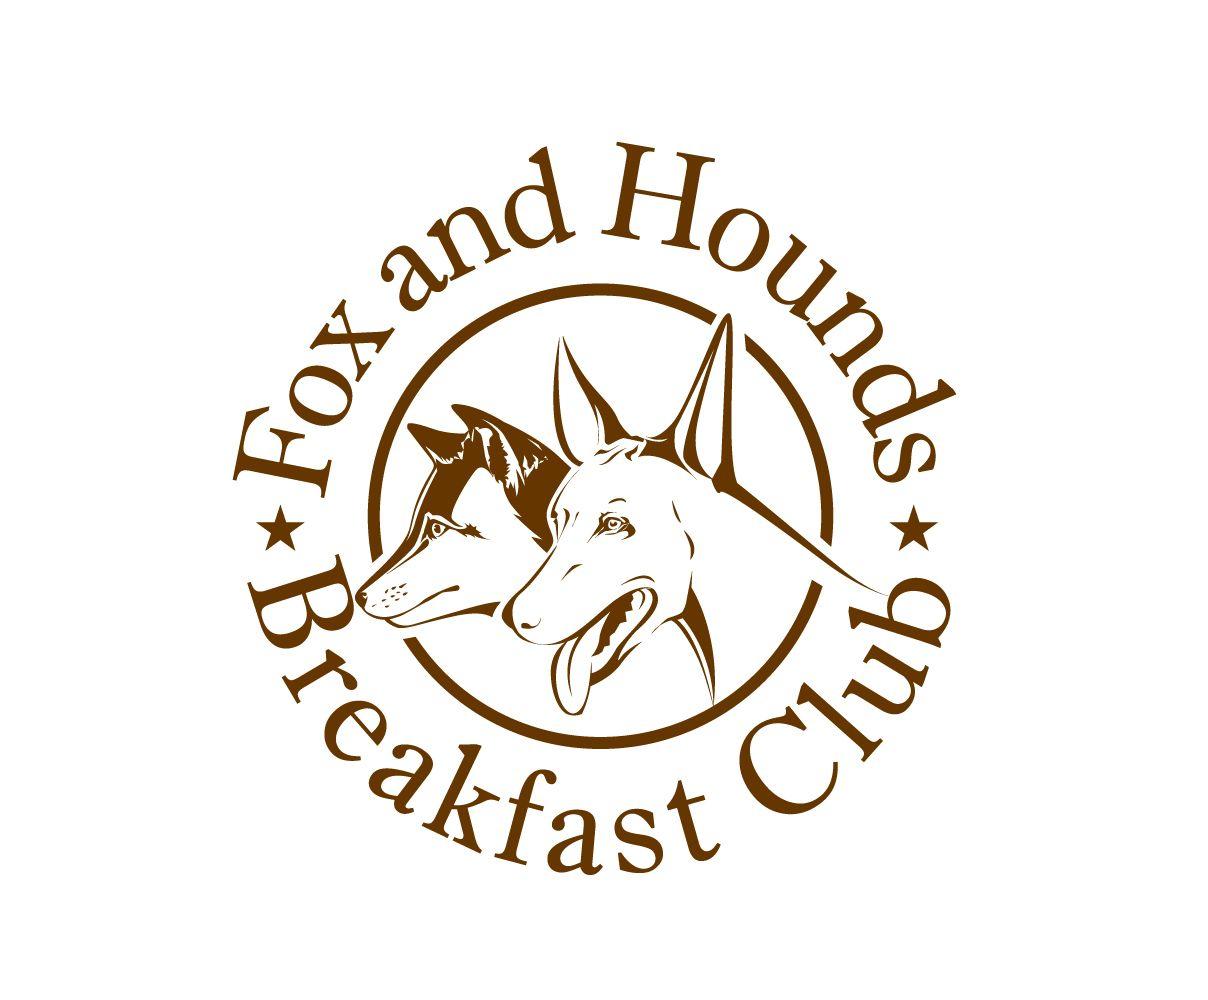 Breakfast Company Logo - Masculine, Upmarket, Club Logo Design for Fox and Hounds Breakfast